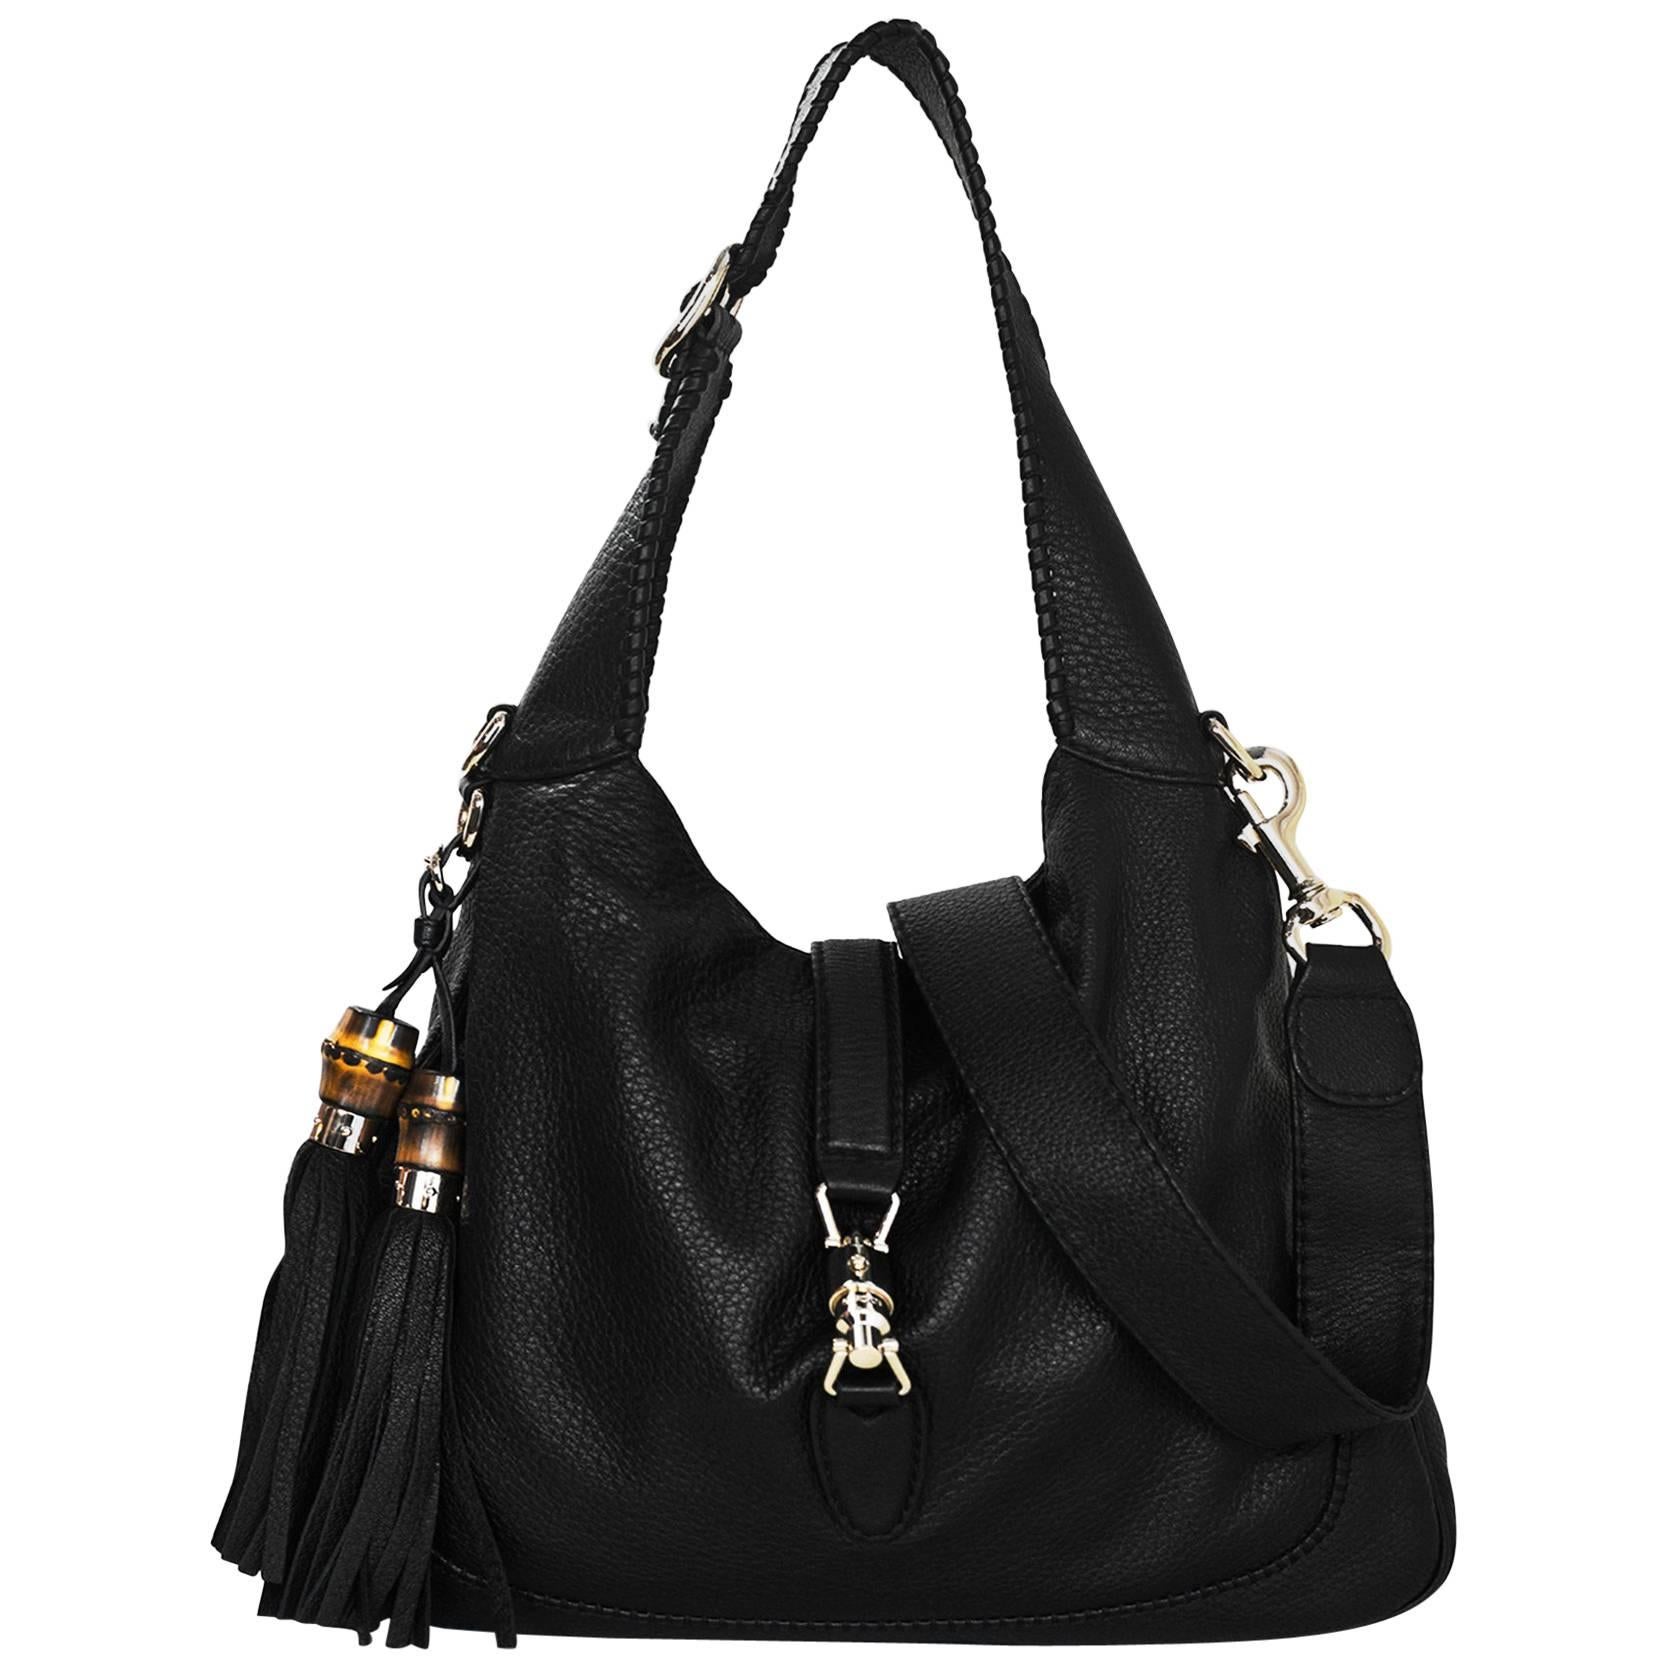 Gucci Black Pebbled Leather "New Jackie" Medium Satchel Bag with DB